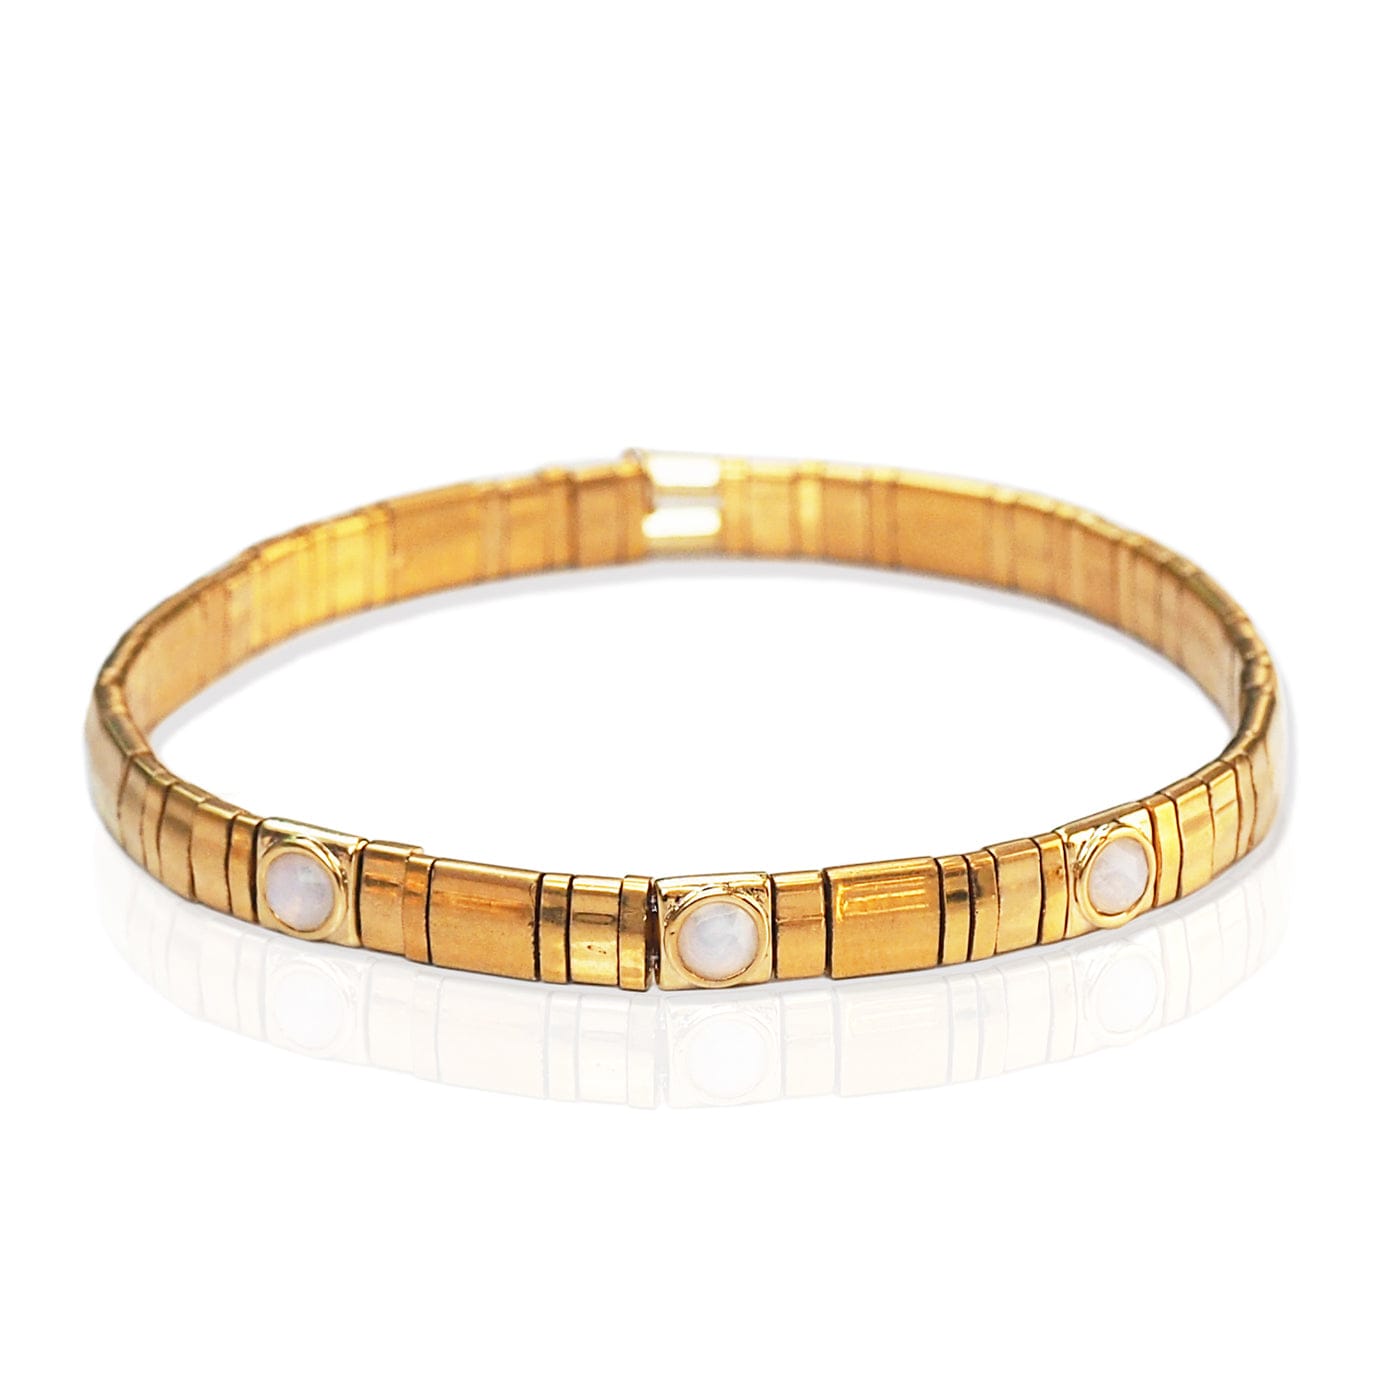 TAI JEWELRY Bracelet -3 Handmade Gold Tila Bead Bracelet With Scattered Stone